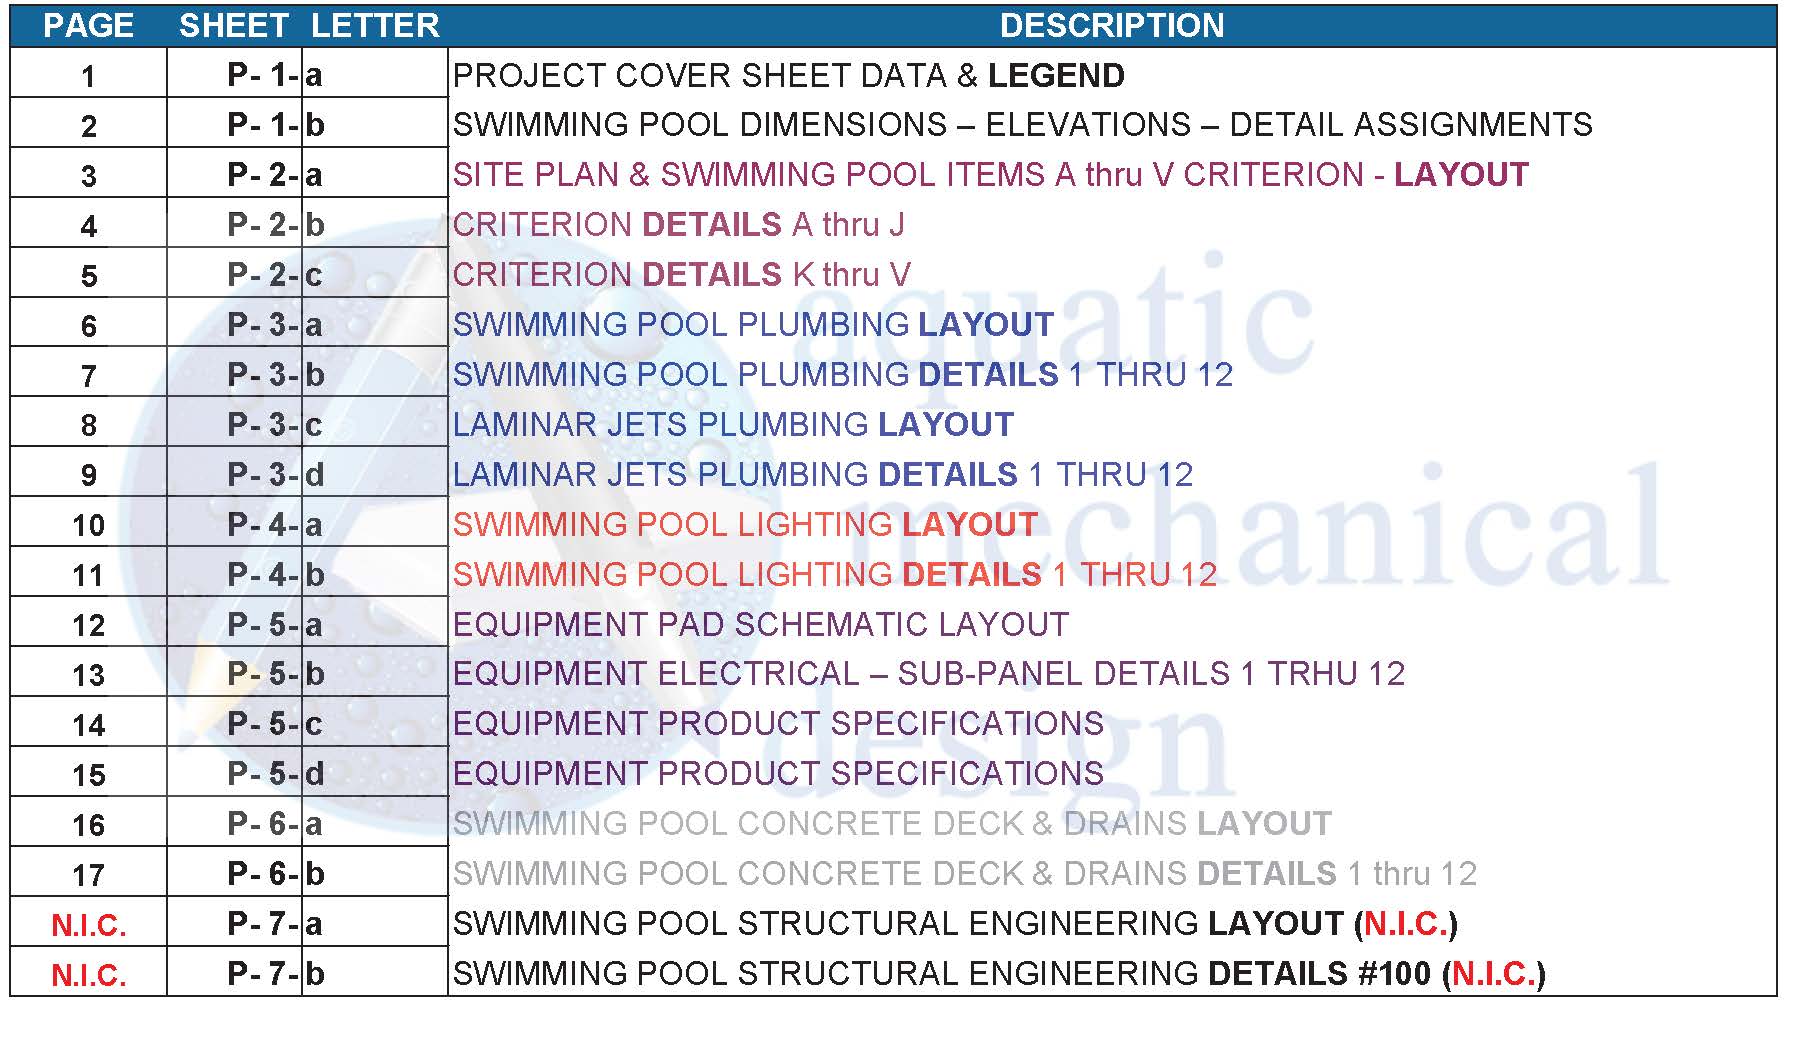 Design Addendum Planning Sheet Listing